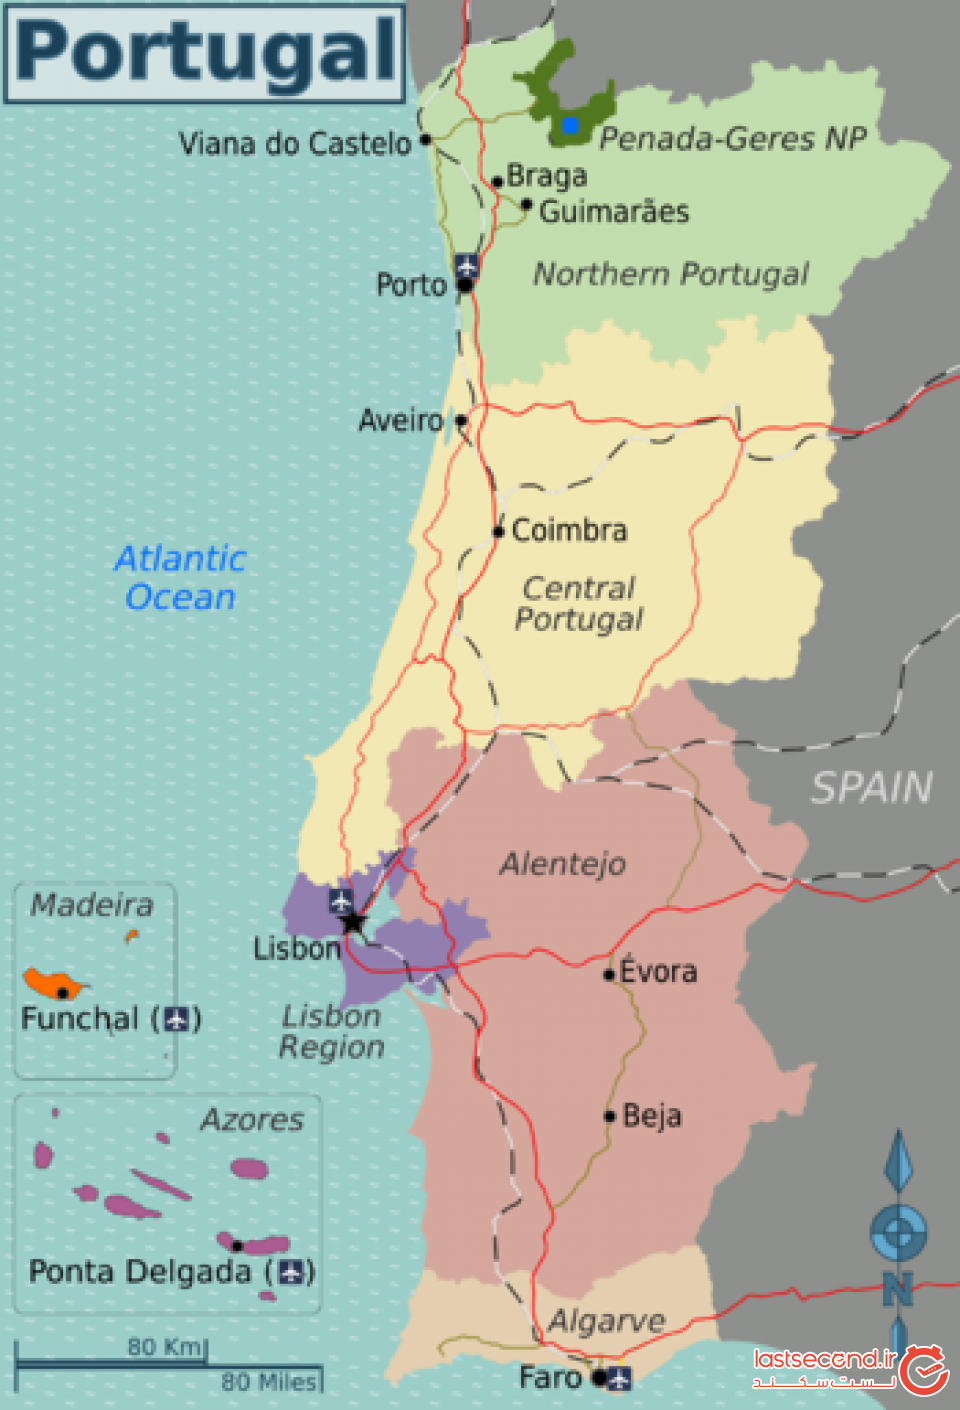 Portugal_regions_travel_map_EN.png